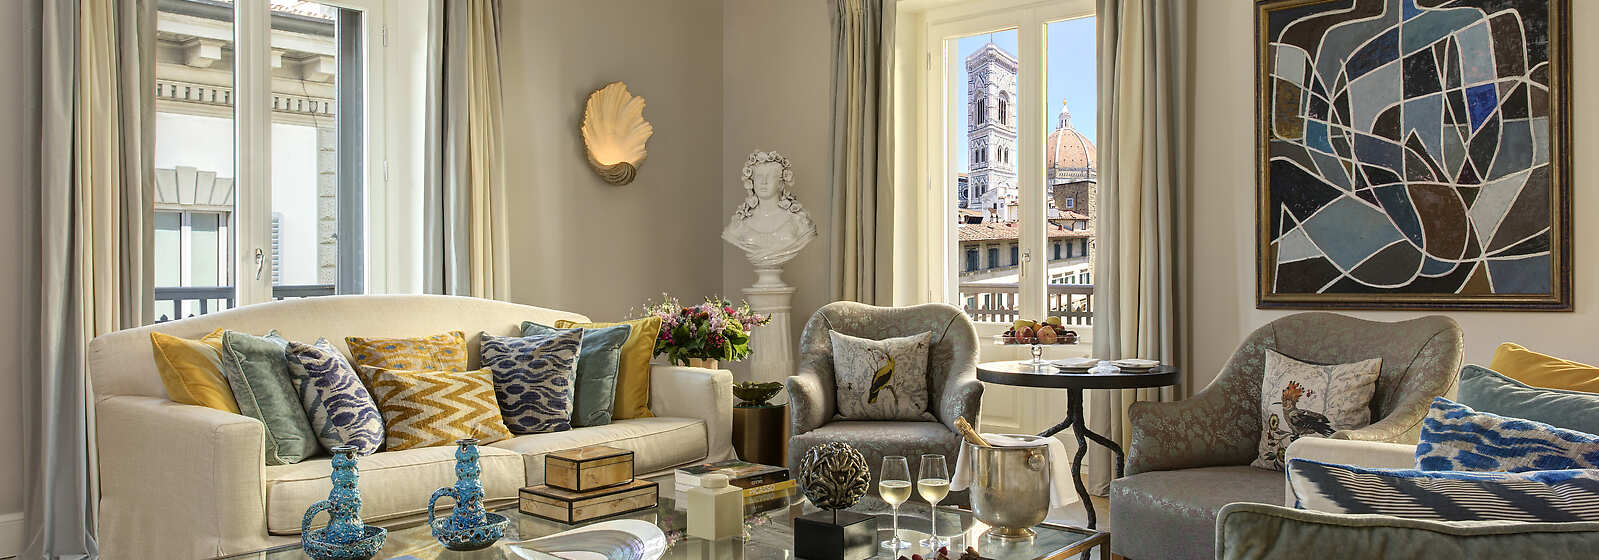 Duomo Presidential Suite's spacious sitting room